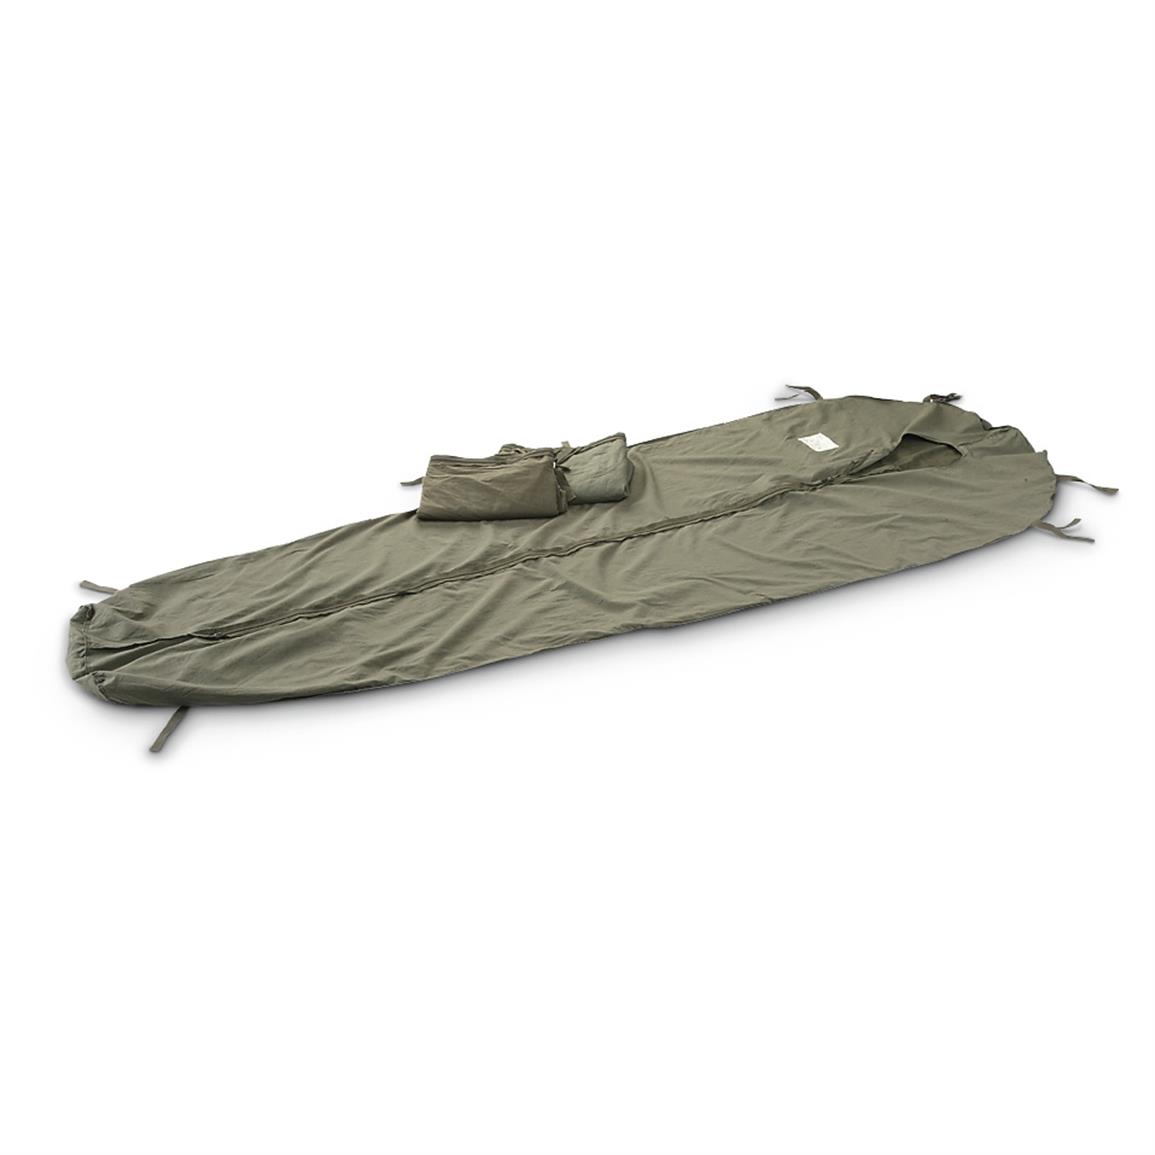 3 Used Dutch Military Surplus Sleeping Bag Liners - 608547, Camo Sleeping Bags at Sportsman&#39;s Guide